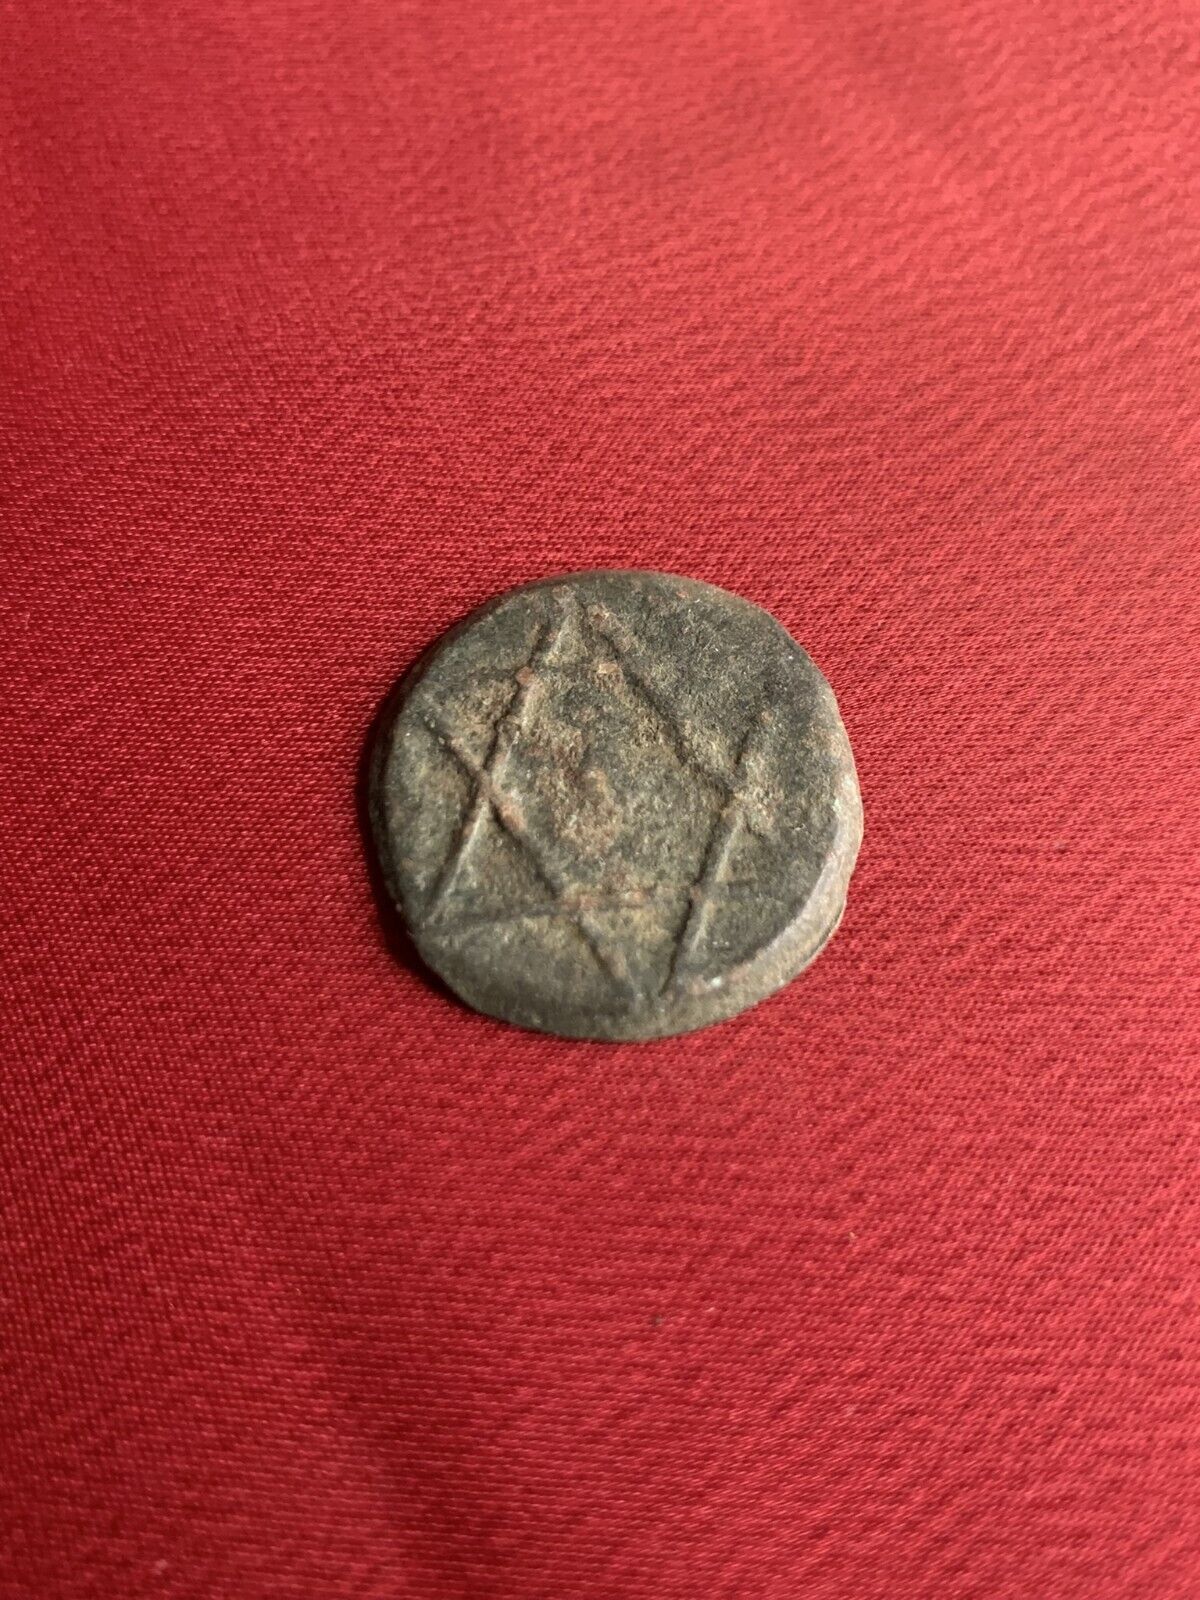 940 BCE Coin Star of David Jewish Israel KING SOLOMON DAVID Antique Old Ancient